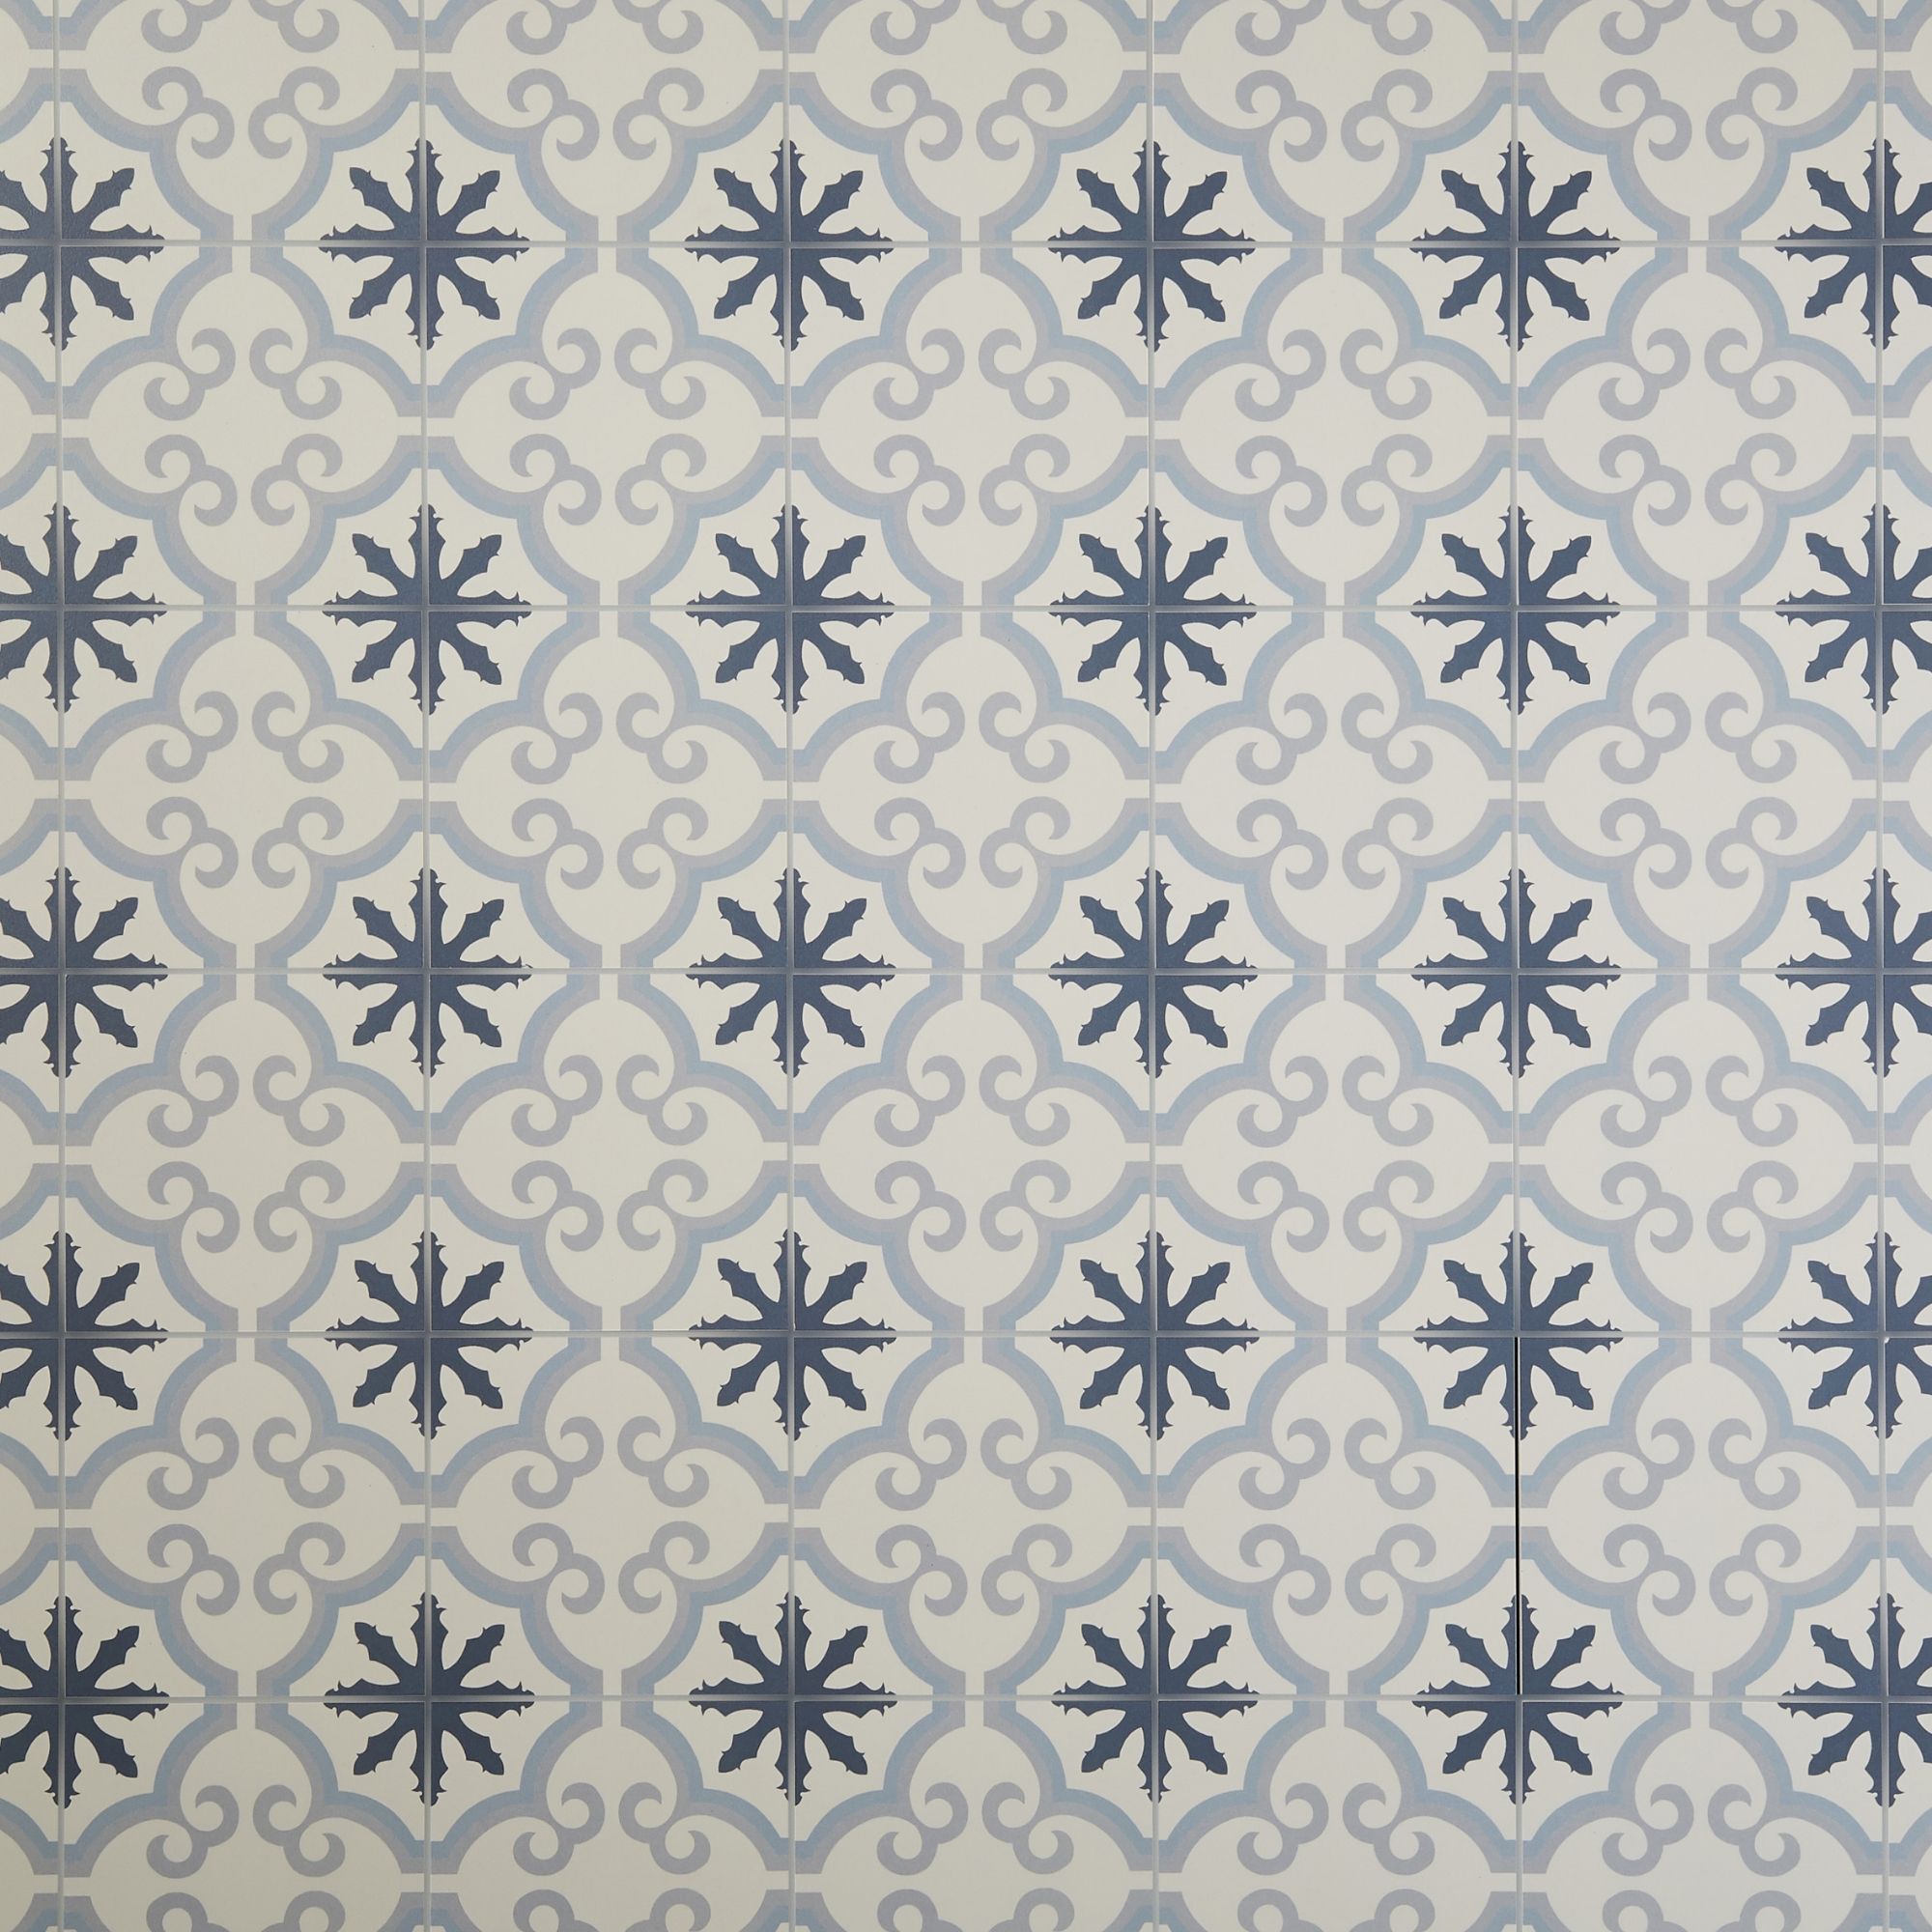 Hydrolic Blue Matt Flower Concrete effect Porcelain Wall & floor Tile, Pack of 25, (L)200mm (W)200mm